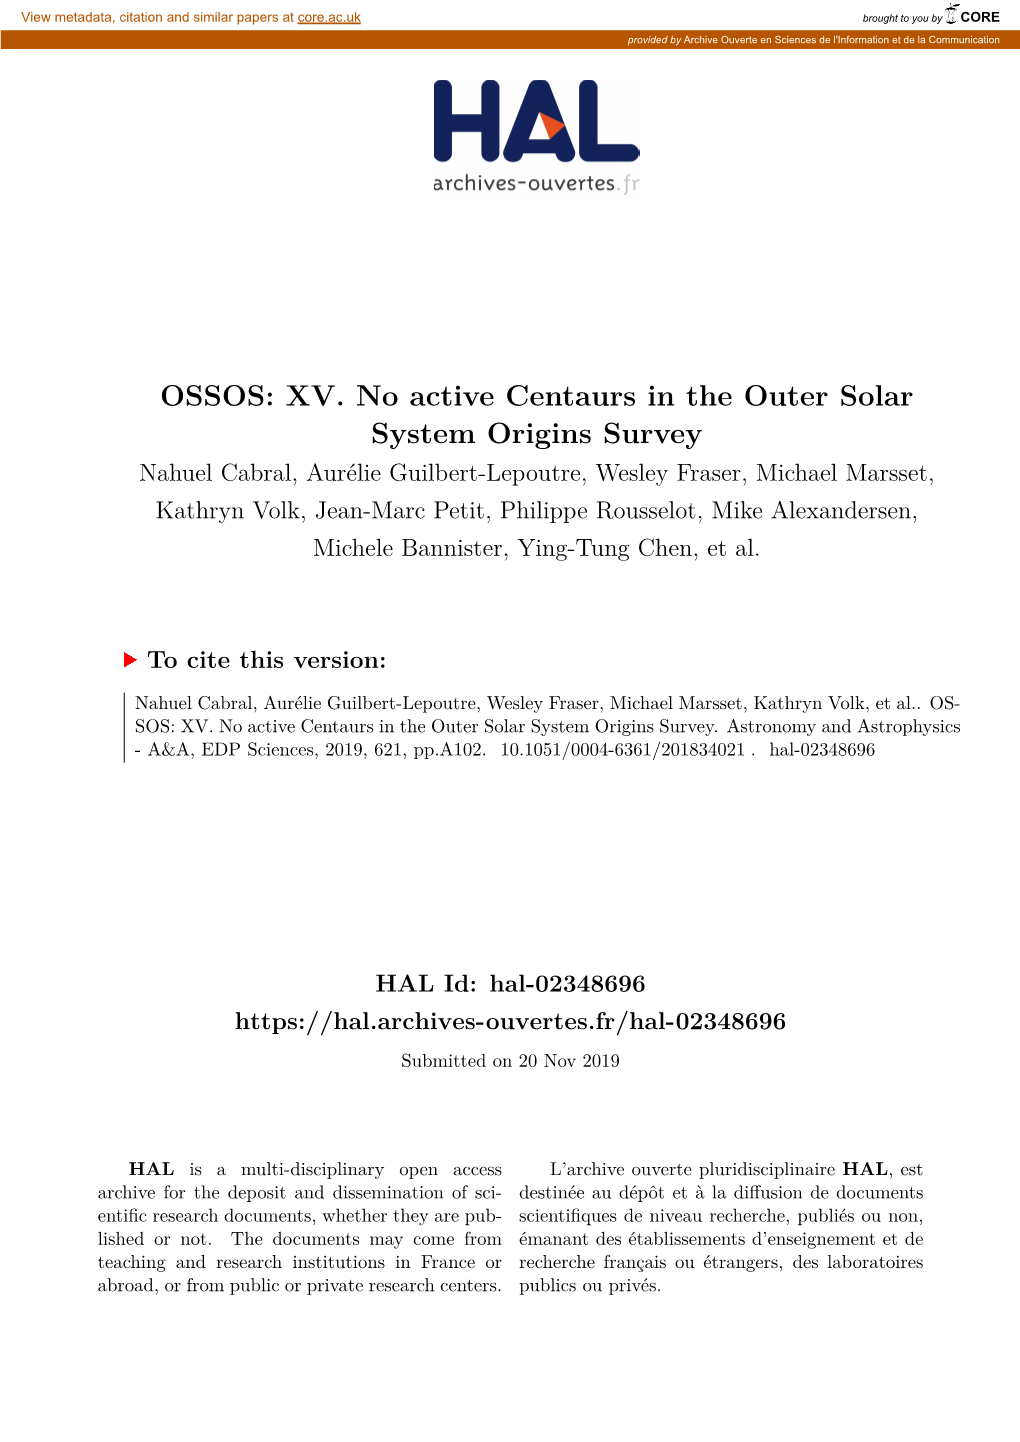 OSSOS: XV. No Active Centaurs in the Outer Solar System Origins Survey